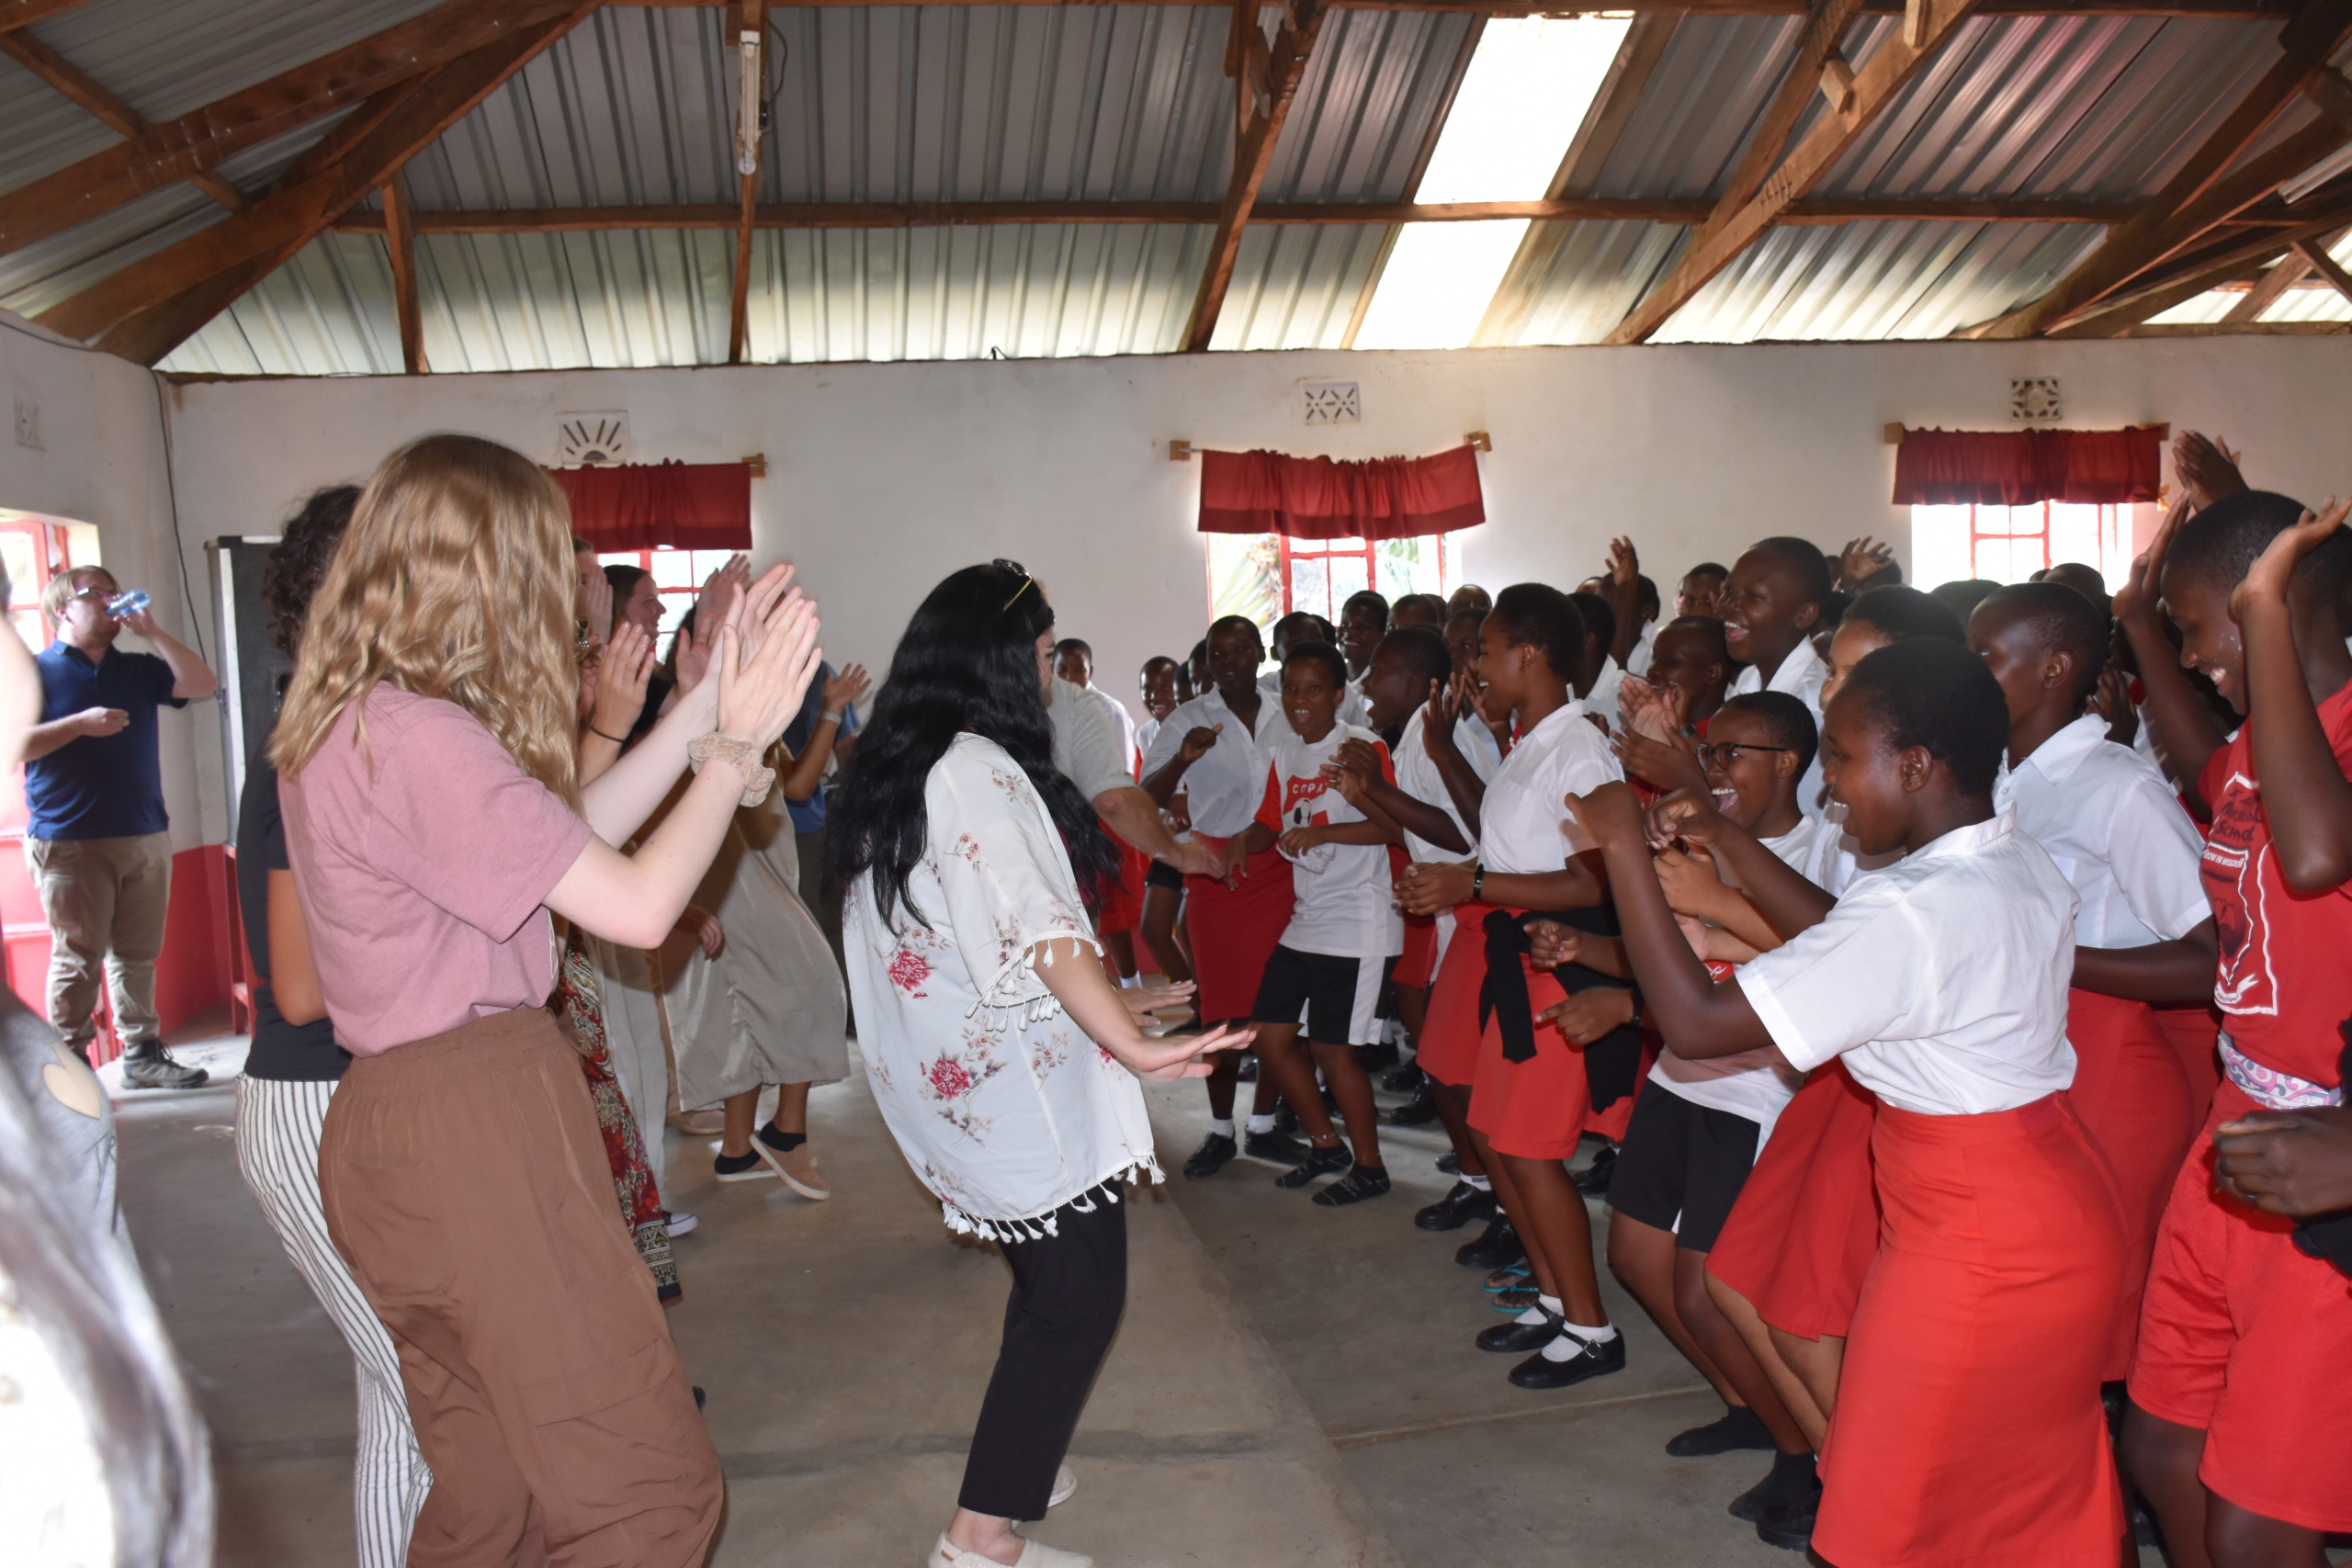 Fulbright Visit Celebration NIU Participants and JAMS Students Dance Together